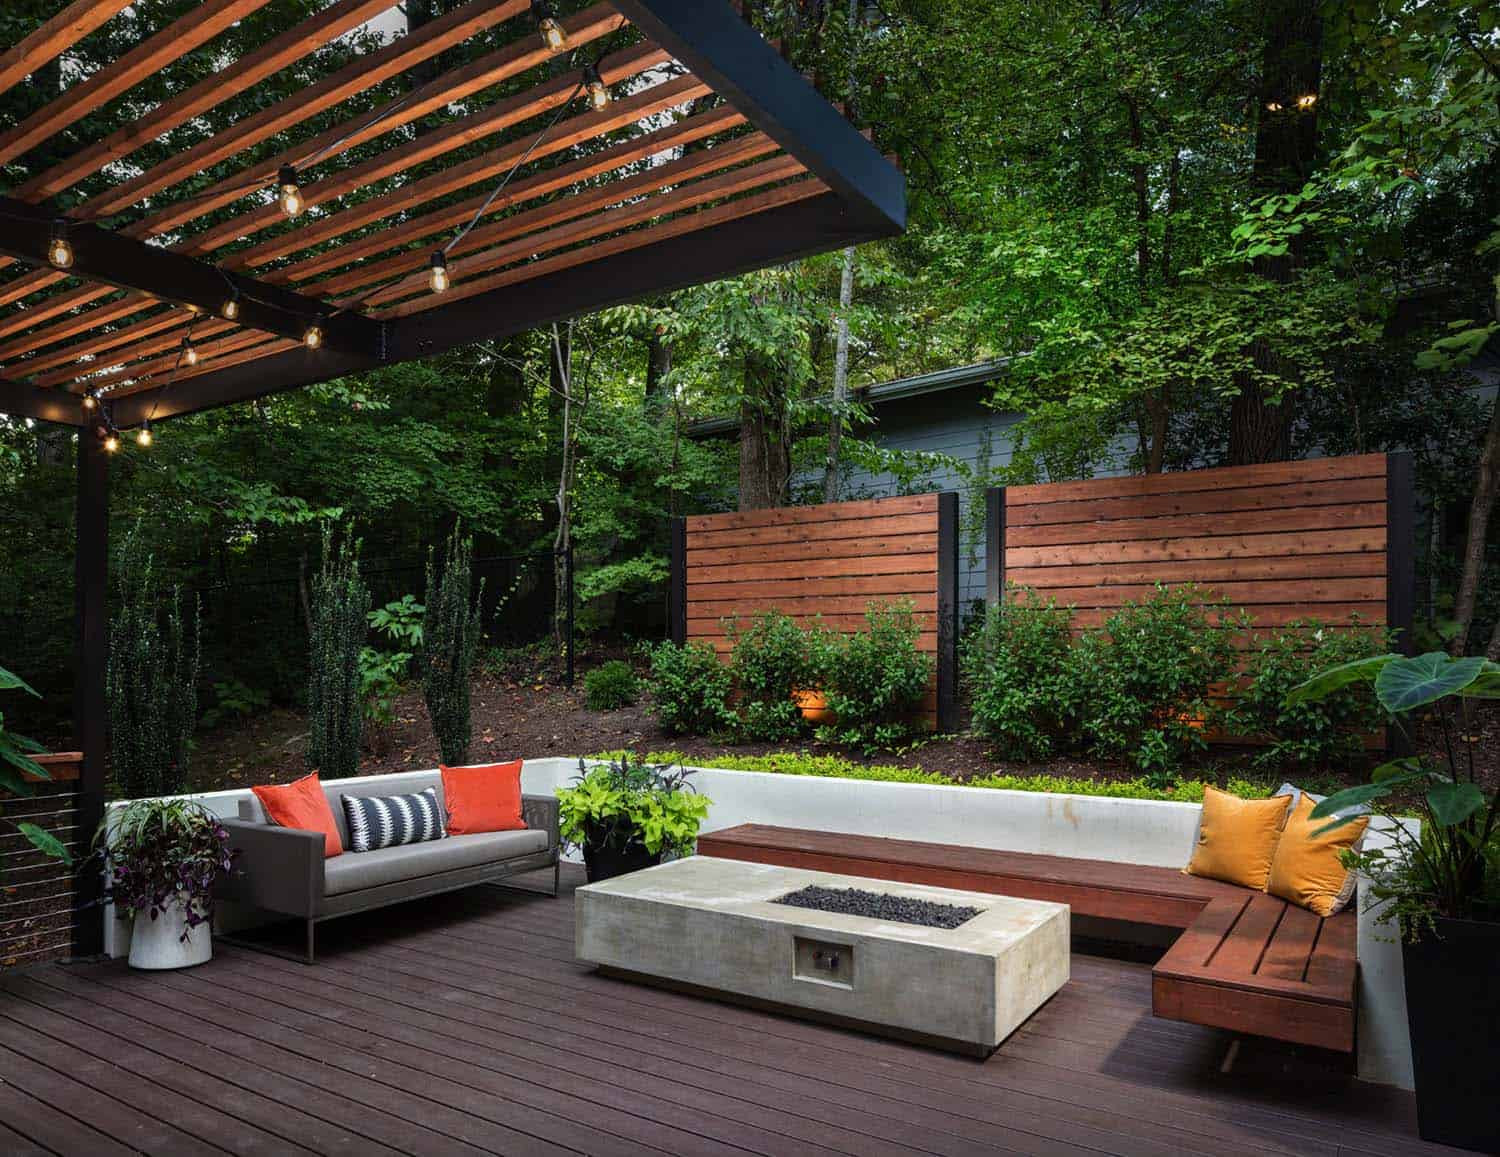 Backyard Design With Fire Pit
 28 Inspiring Fire Pit Ideas To Create A Fabulous Backyard